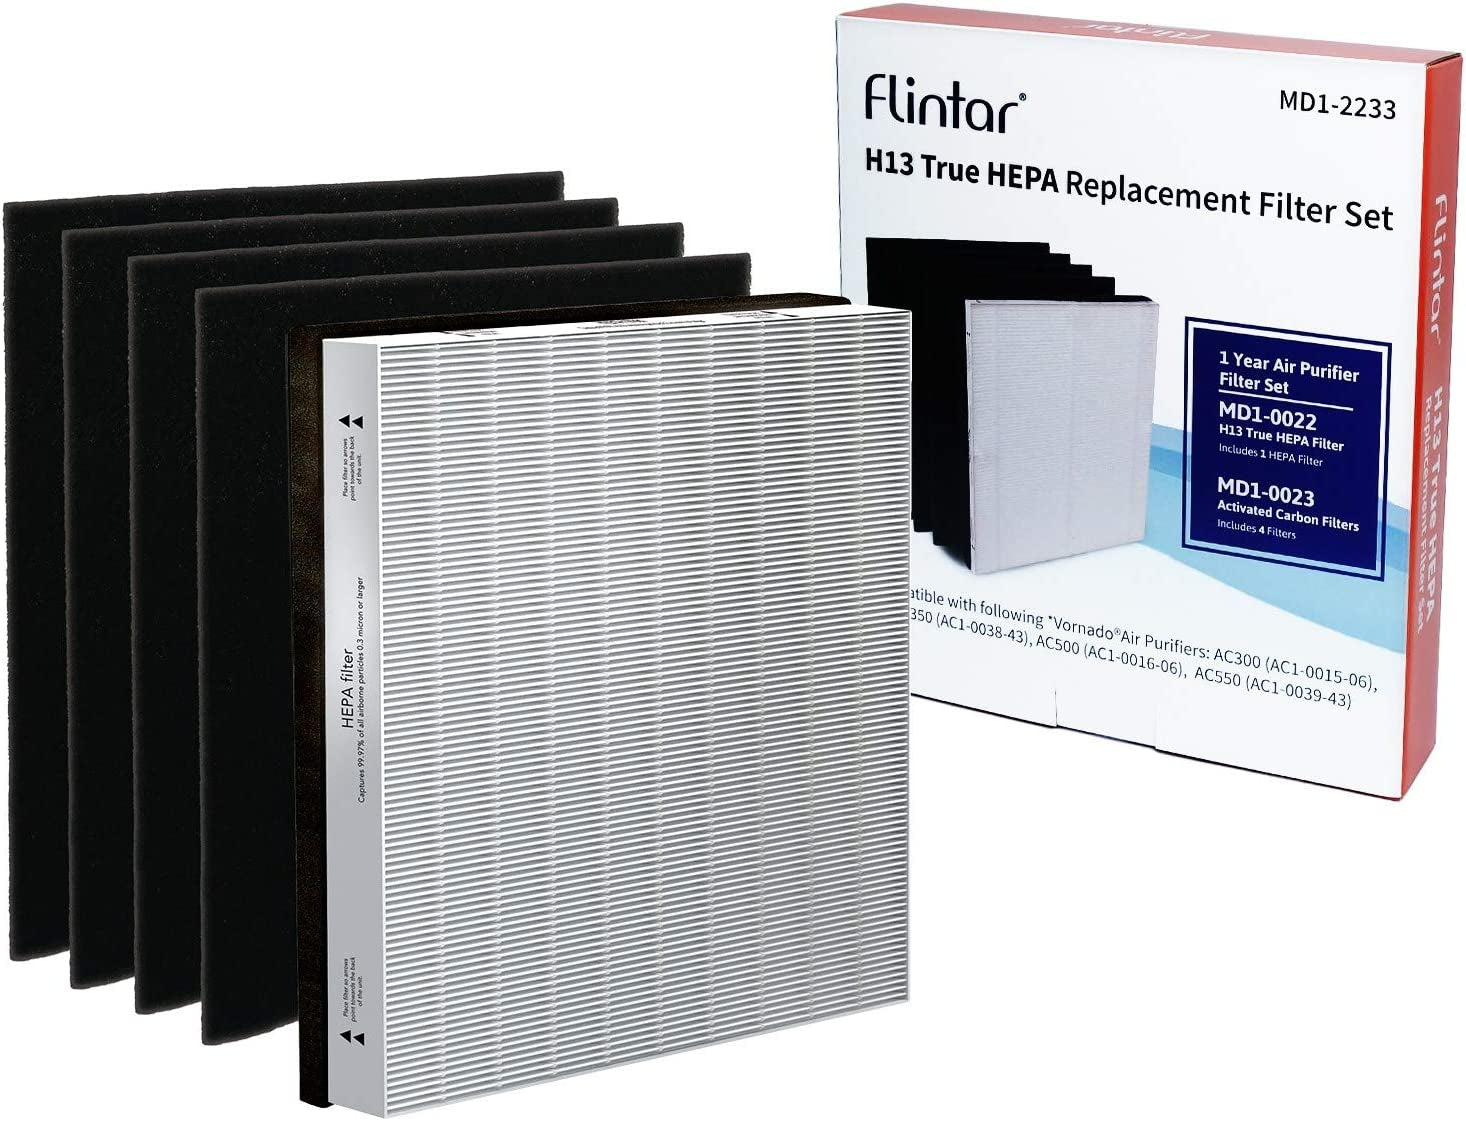 Flintar, Flintar H13 True HEPA Replacement Filter Combo Pack, Compatible with Vornado Air Purifier, (1) H13 True HEPA Filter MD1-0022 + (4) Activated Carbon Pre-Filter MD1-0023, 1-Year Filter Set